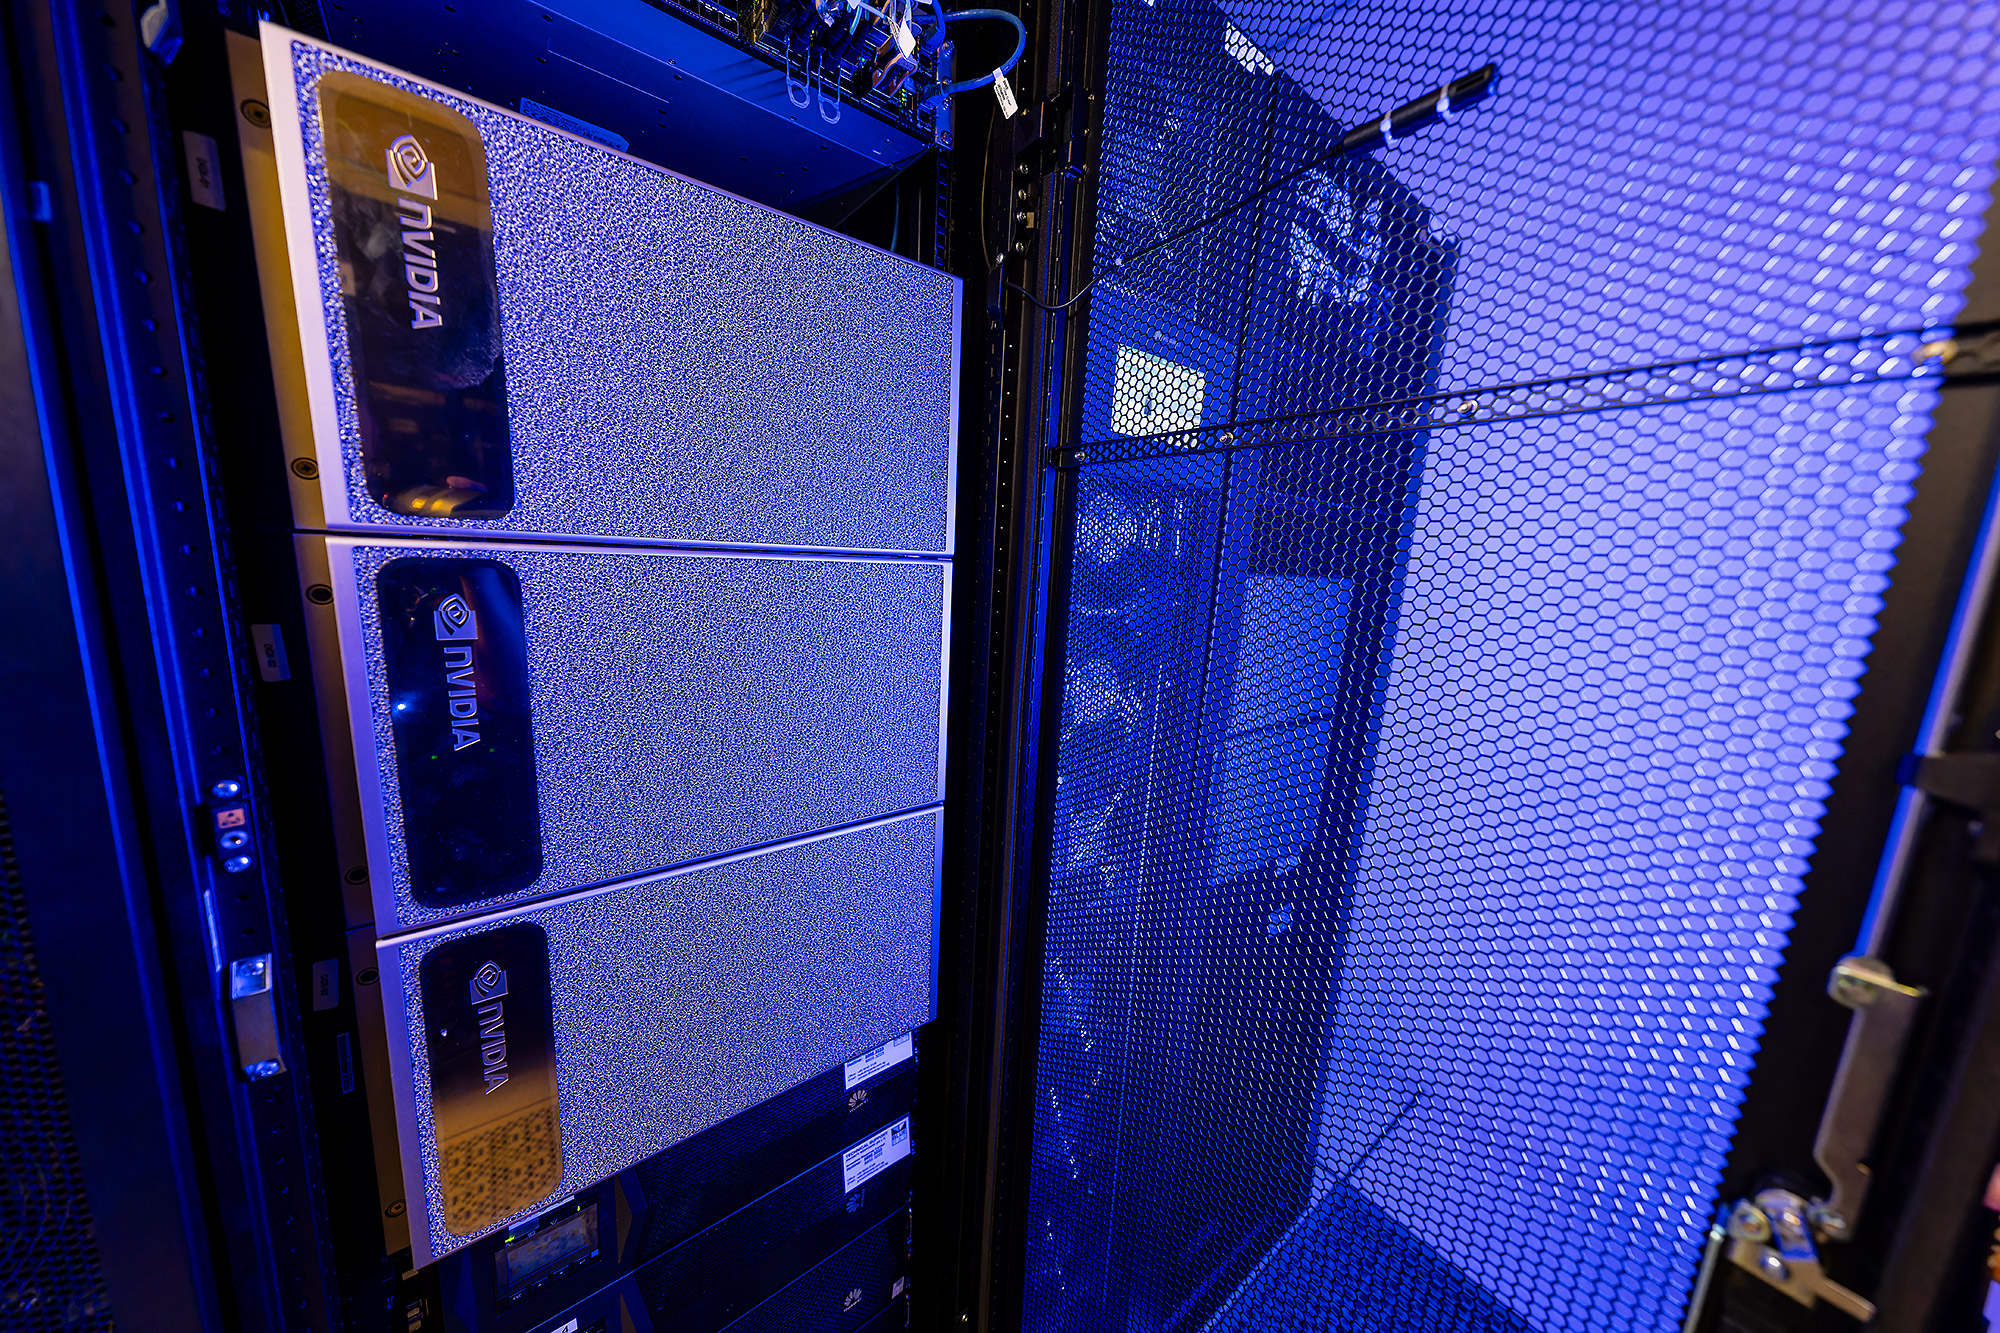 NUHS Prescience supercomputer